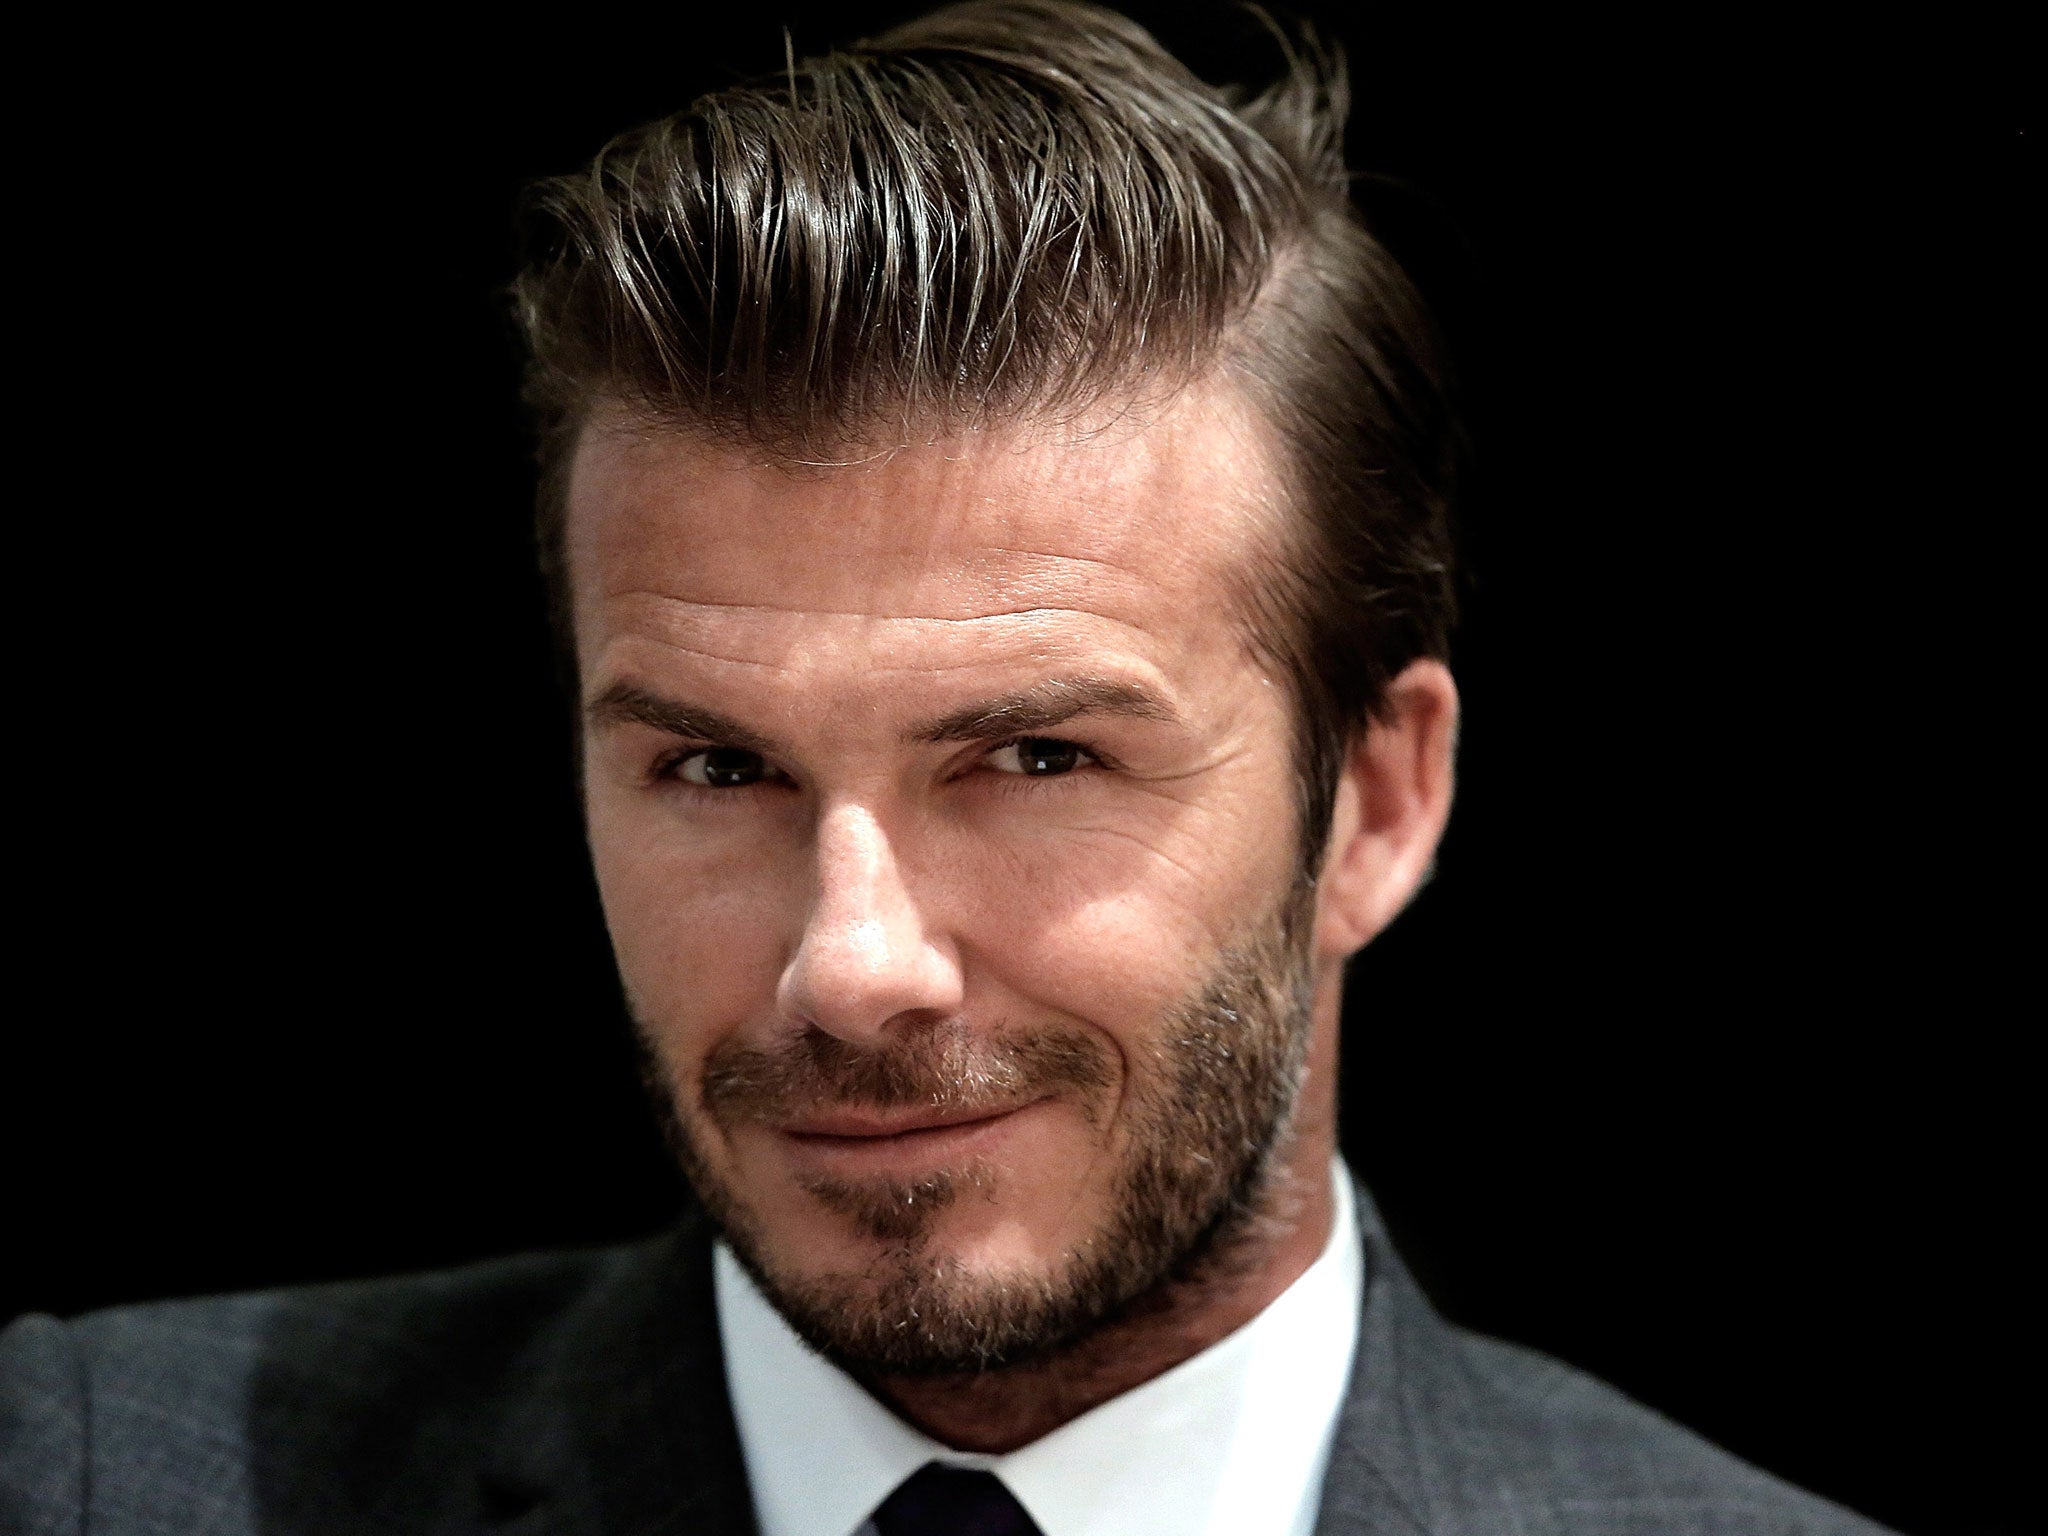 David Beckham attends a forum for Chinese Super League